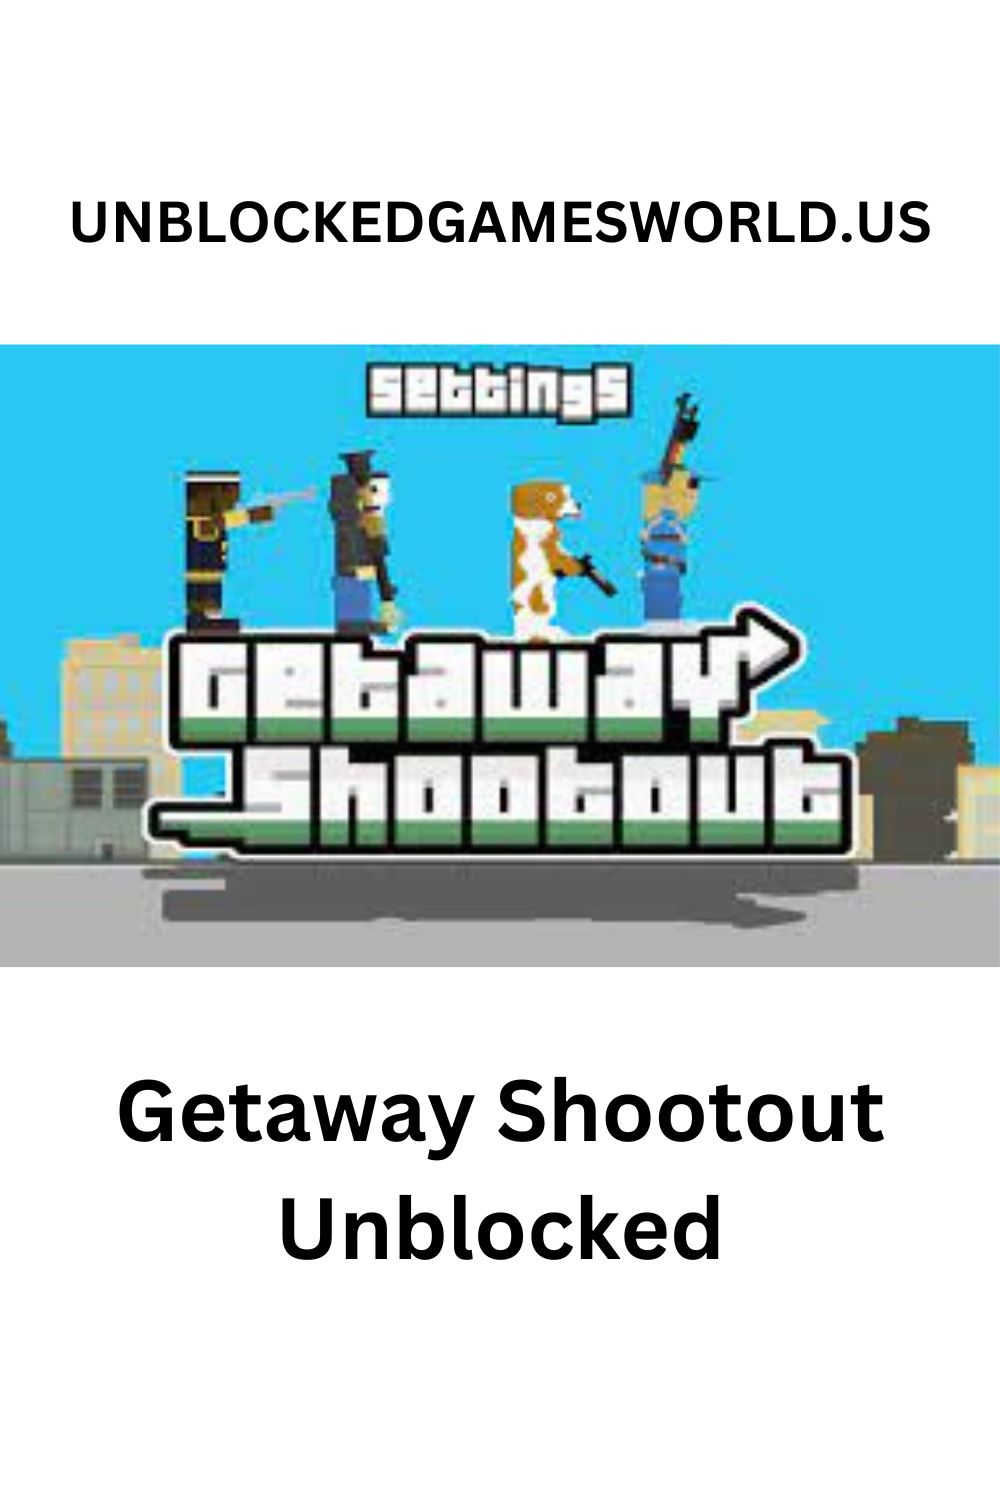 Unblocked Games World (@Un_blockedgames) / X